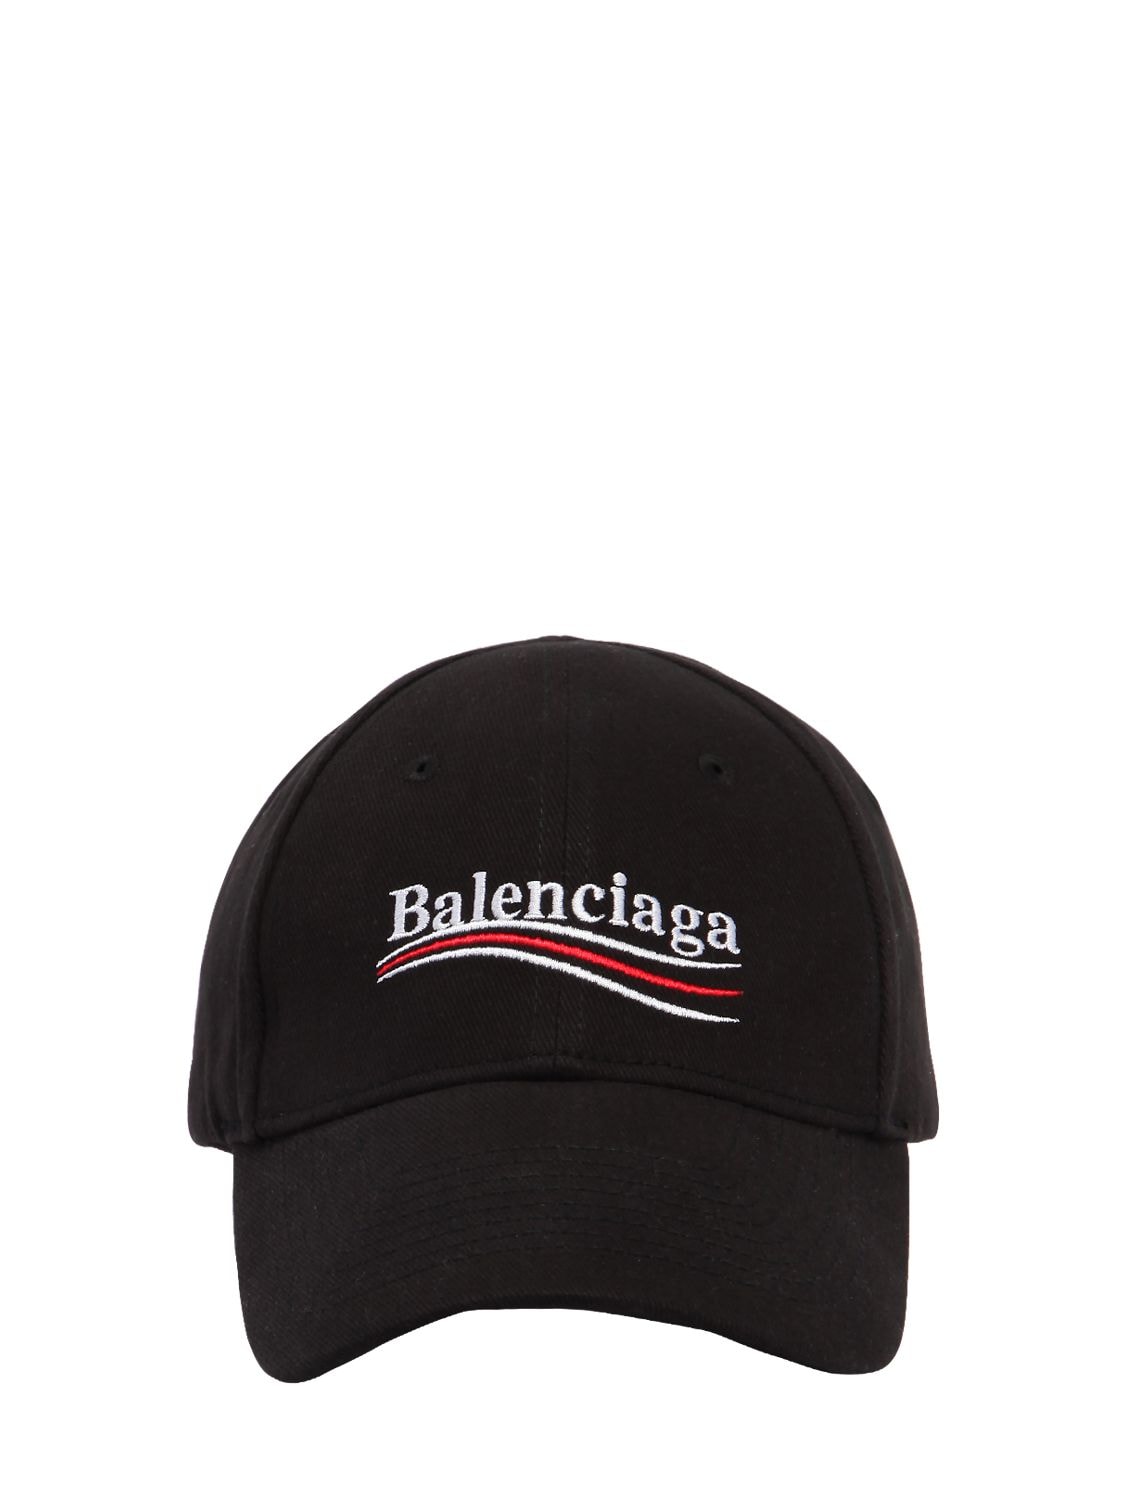 BALENCIAGA "NEW POLITICAL"LOGO纯棉帽子,67IIUU061-MTA3Nw2